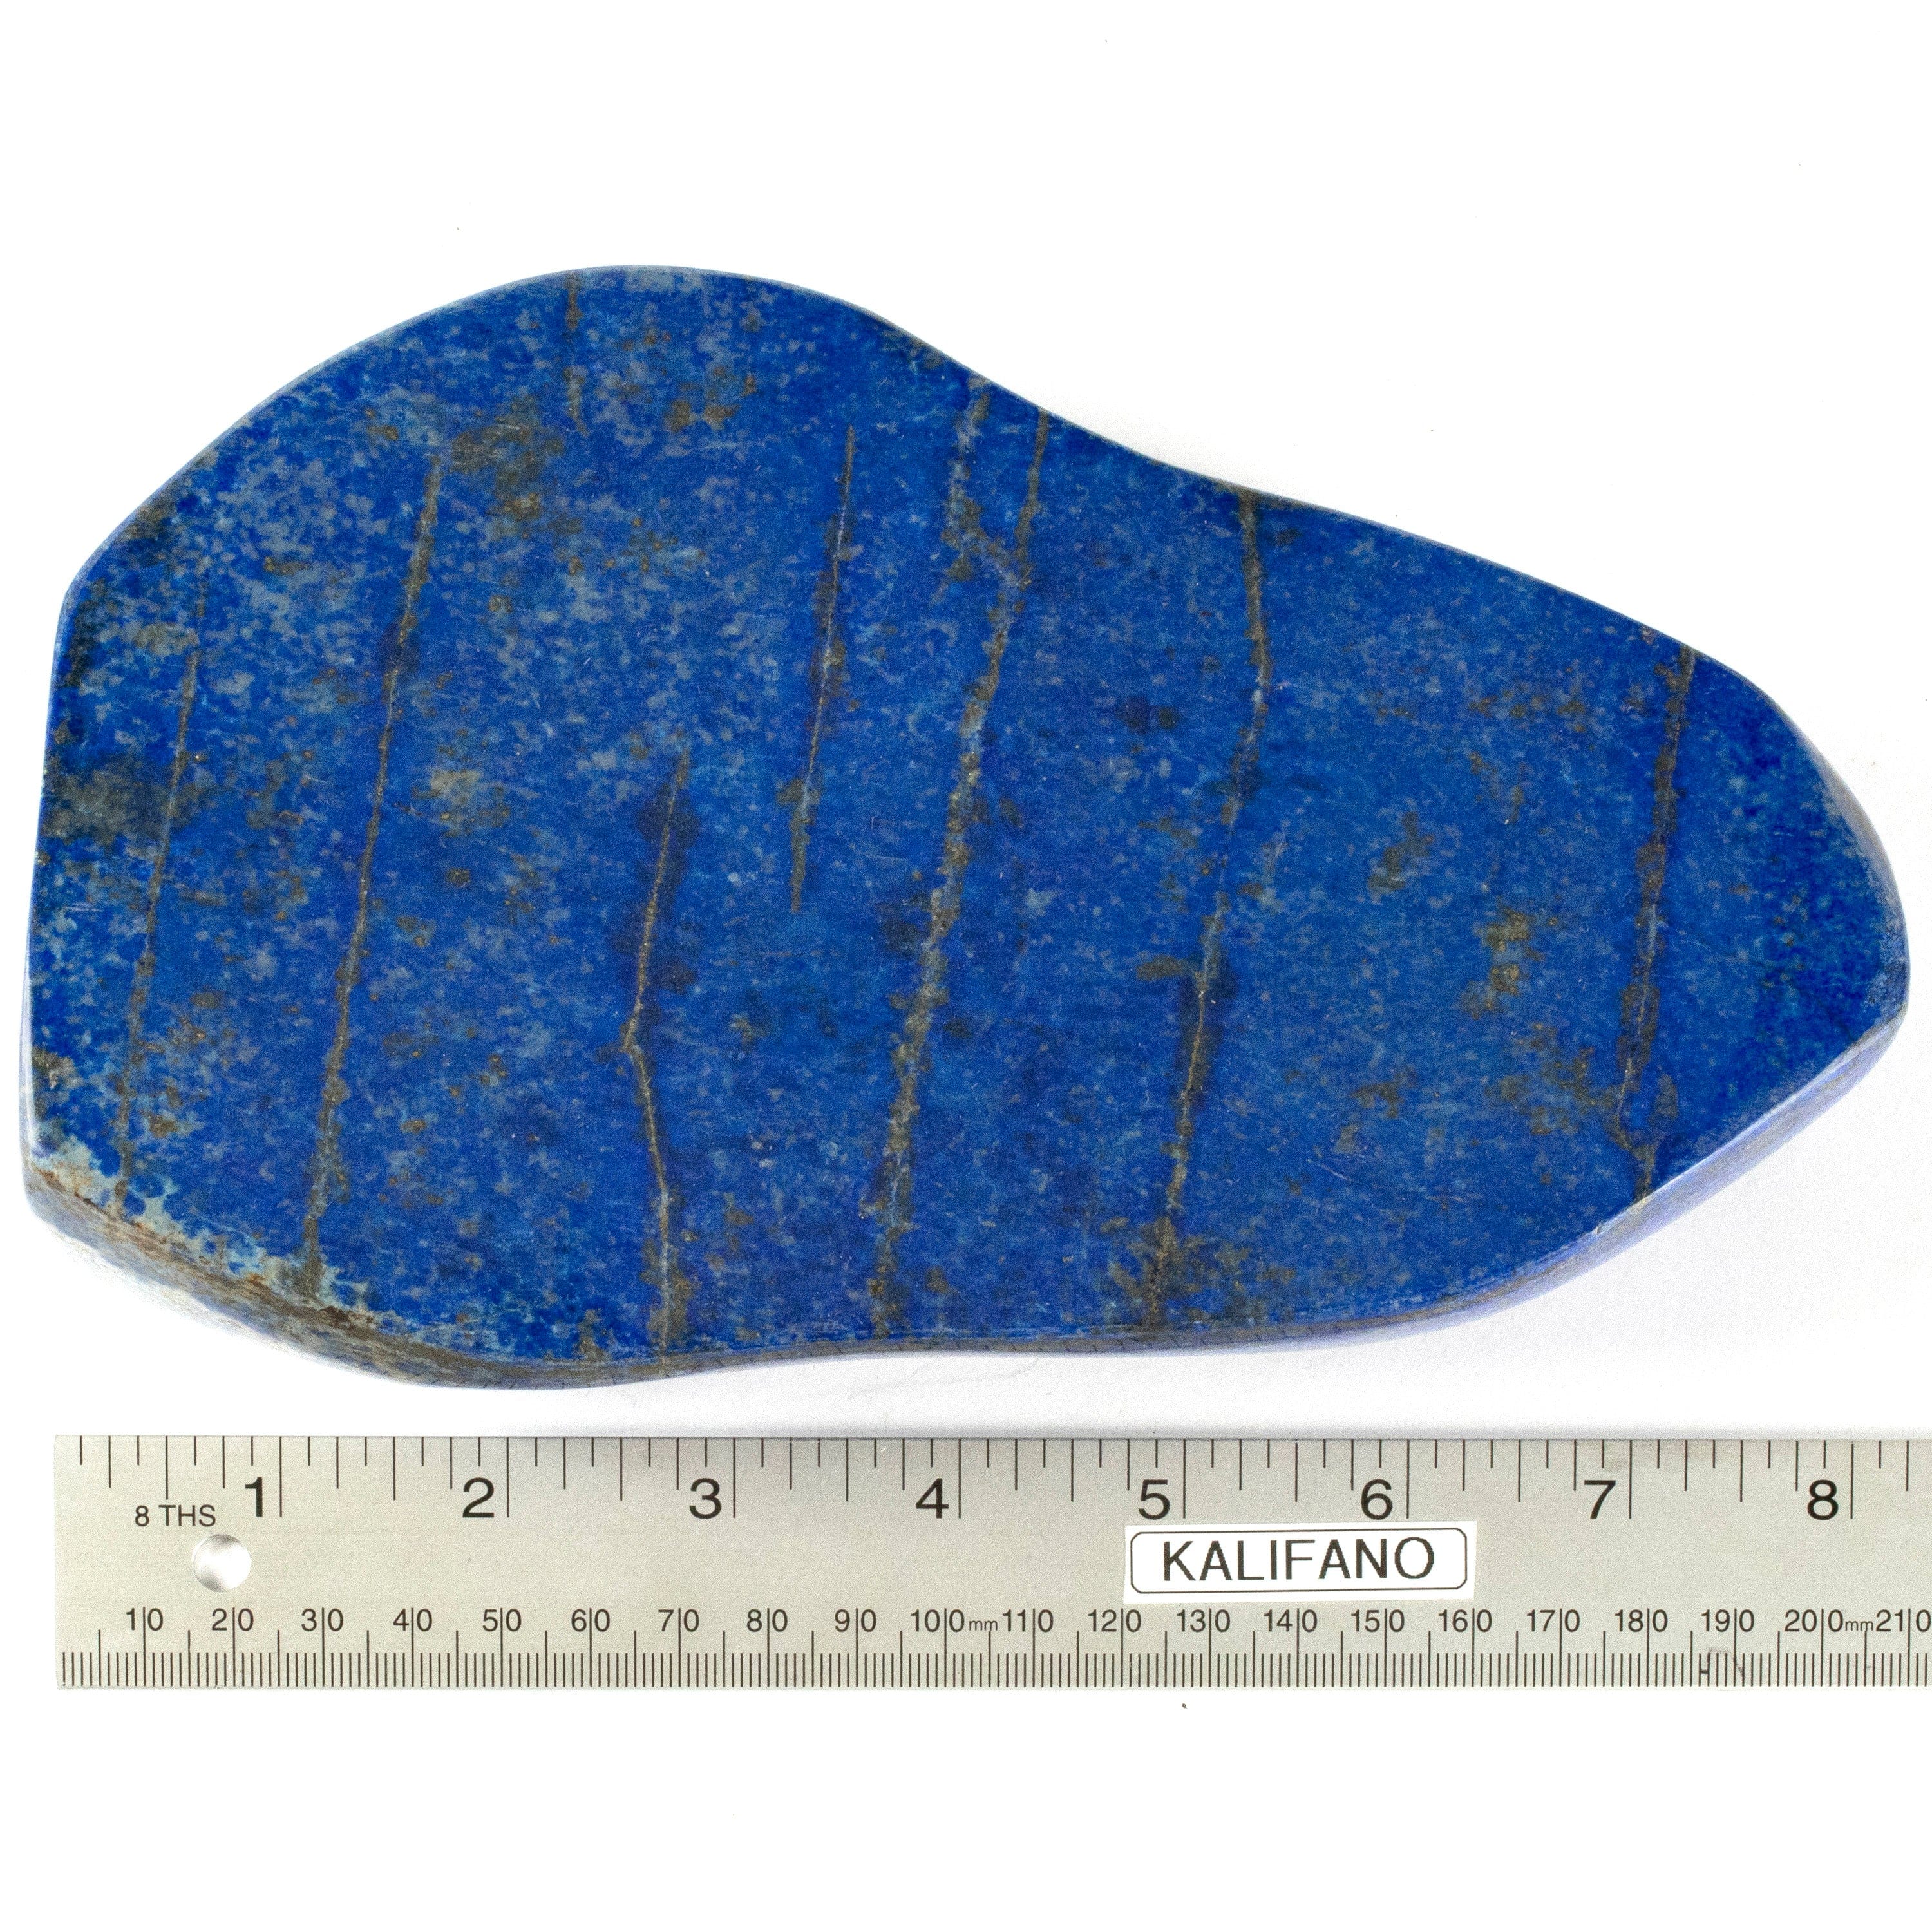 Kalifano Lapis Lapis Lazuli Freeform from Afghanistan - 8" / 1,690 grams LP1700.003